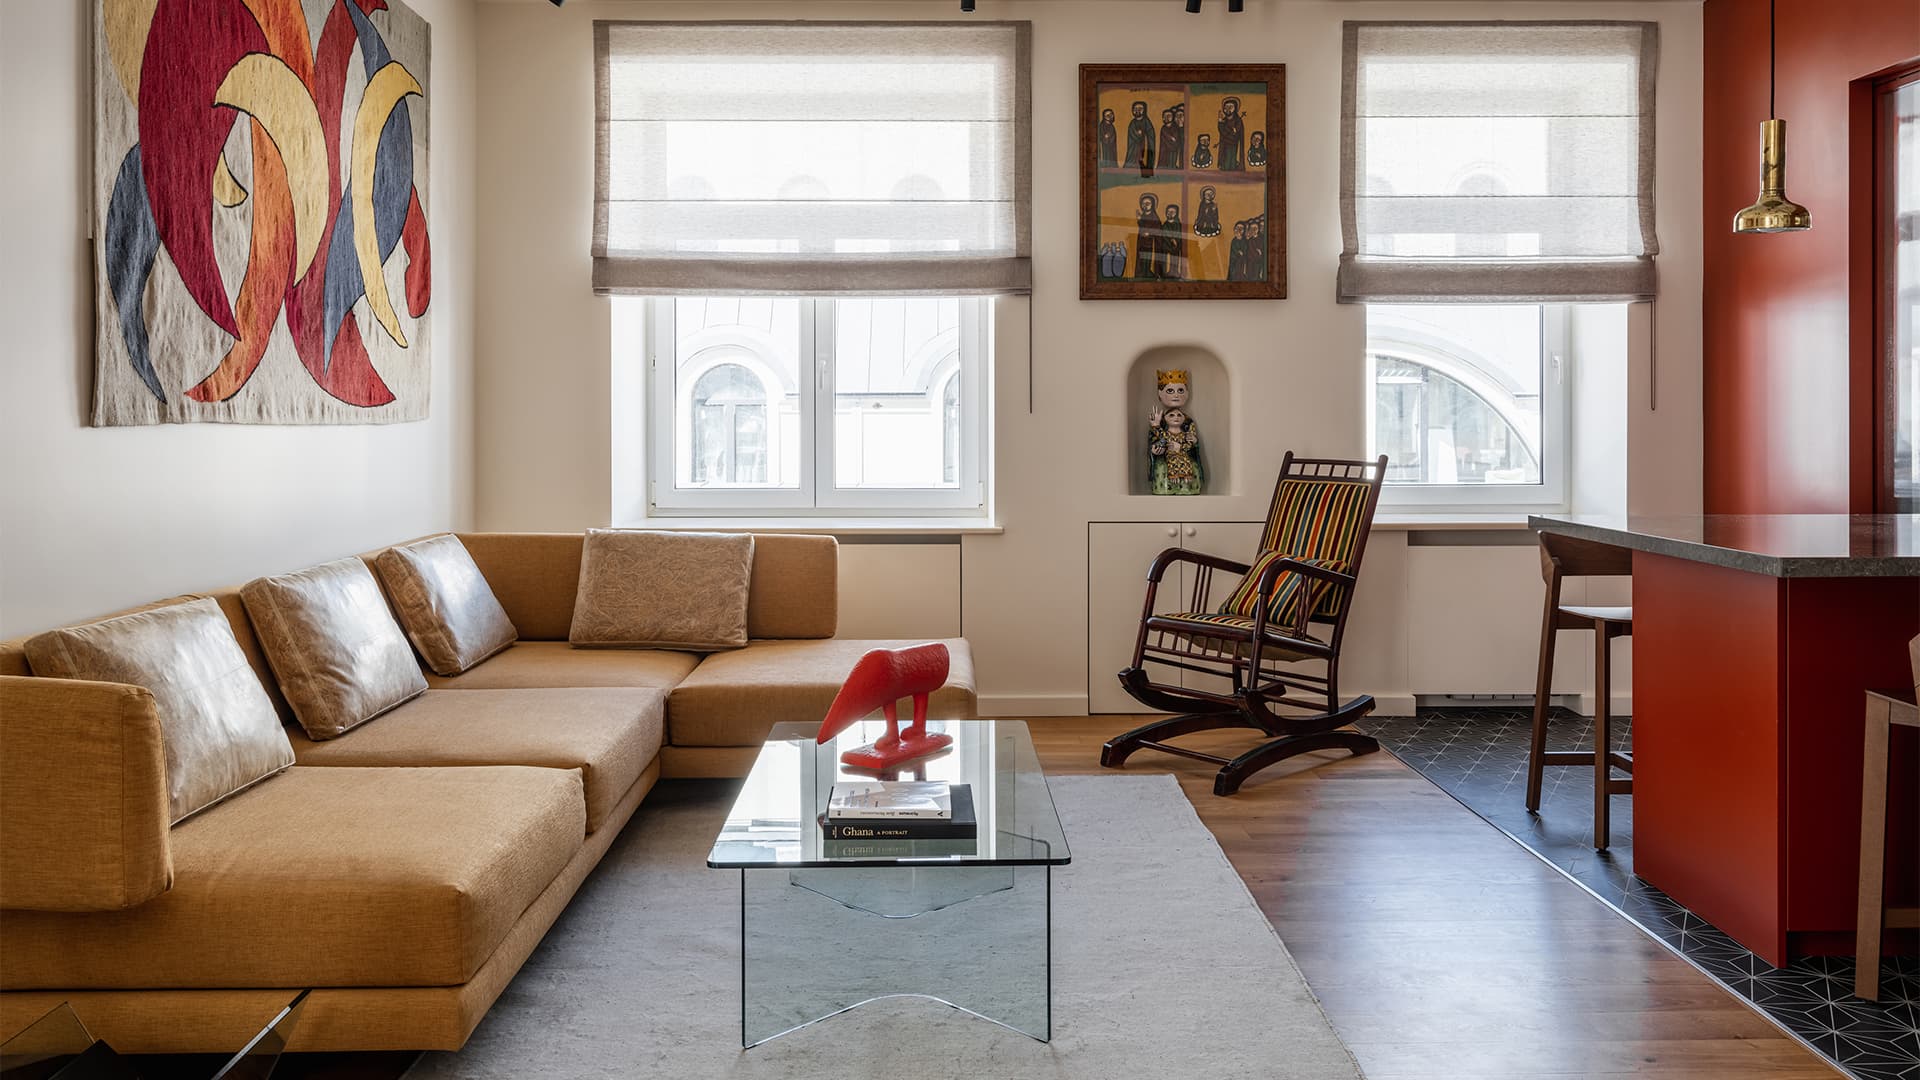 Модернистский интерьер квартиры с винтажными деталями — проект Architectural Studio RE